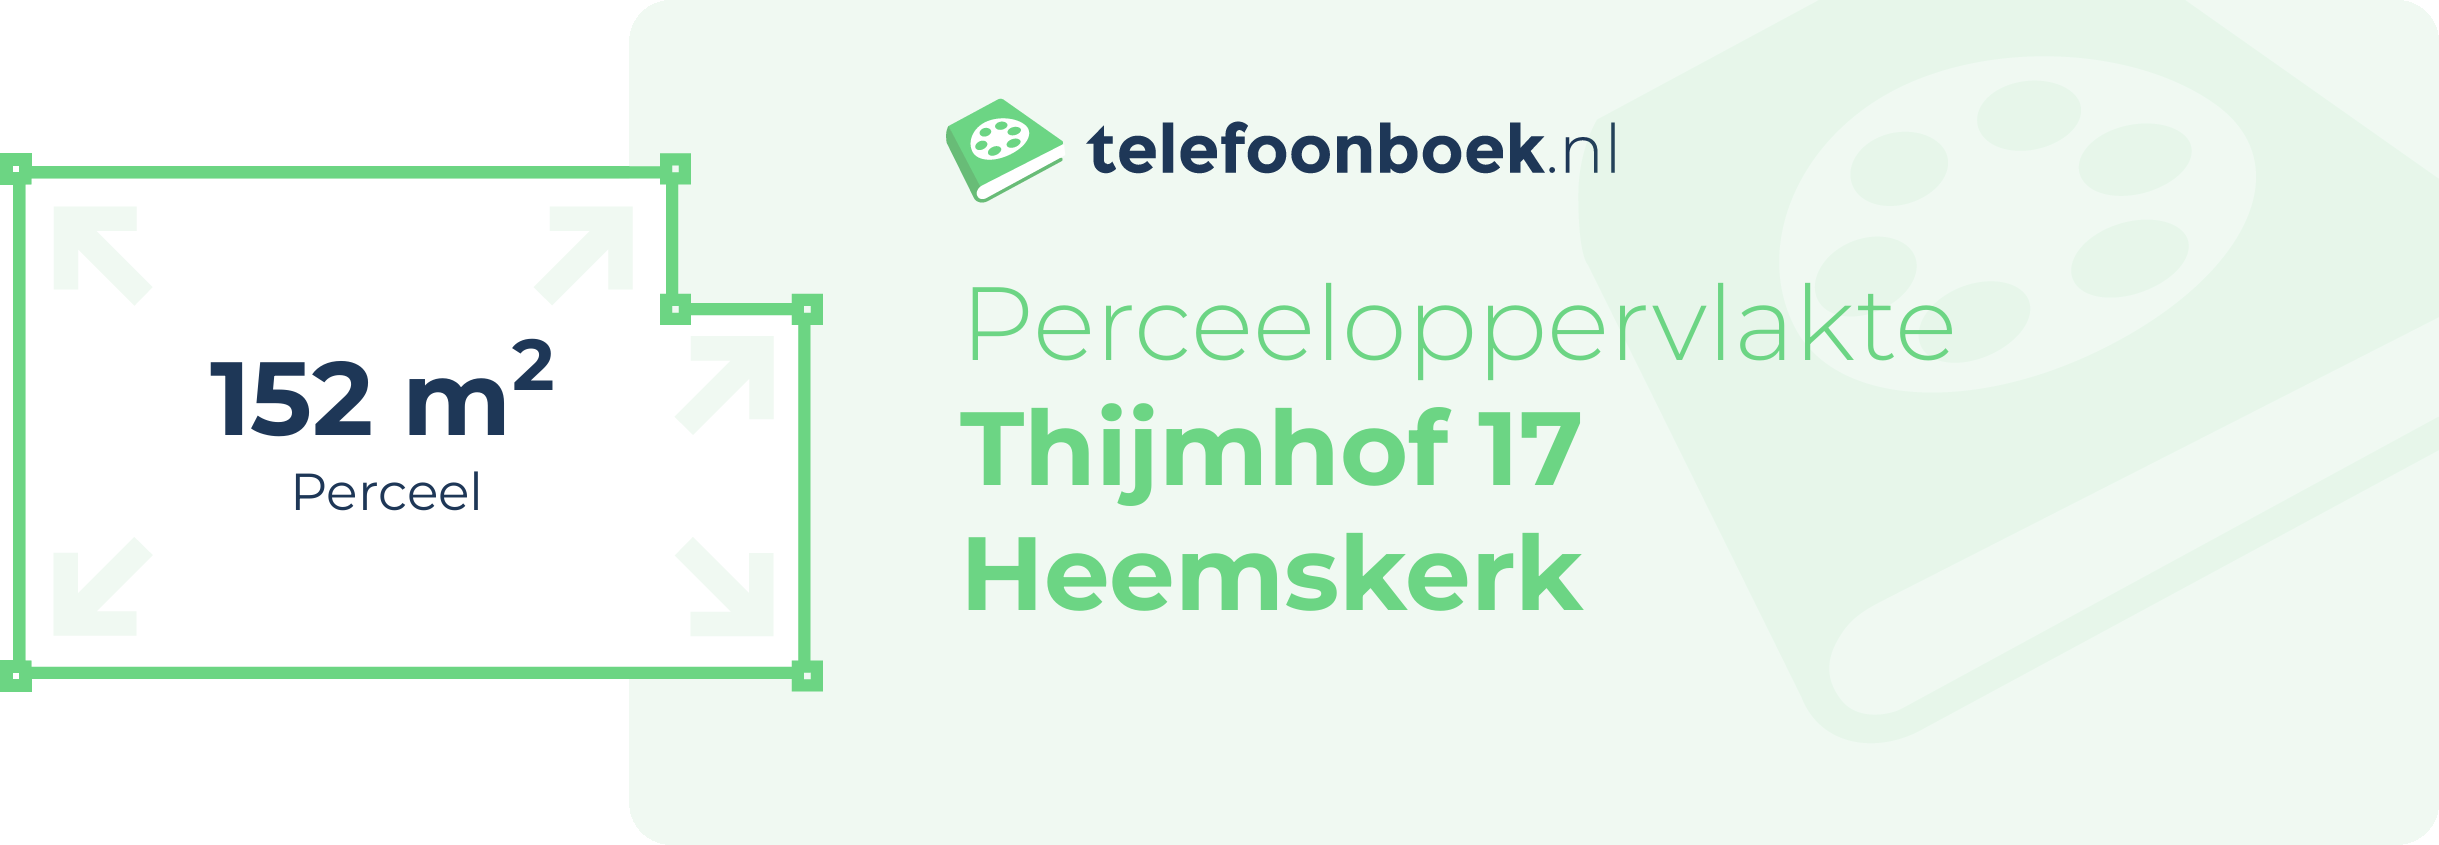 Perceeloppervlakte Thijmhof 17 Heemskerk